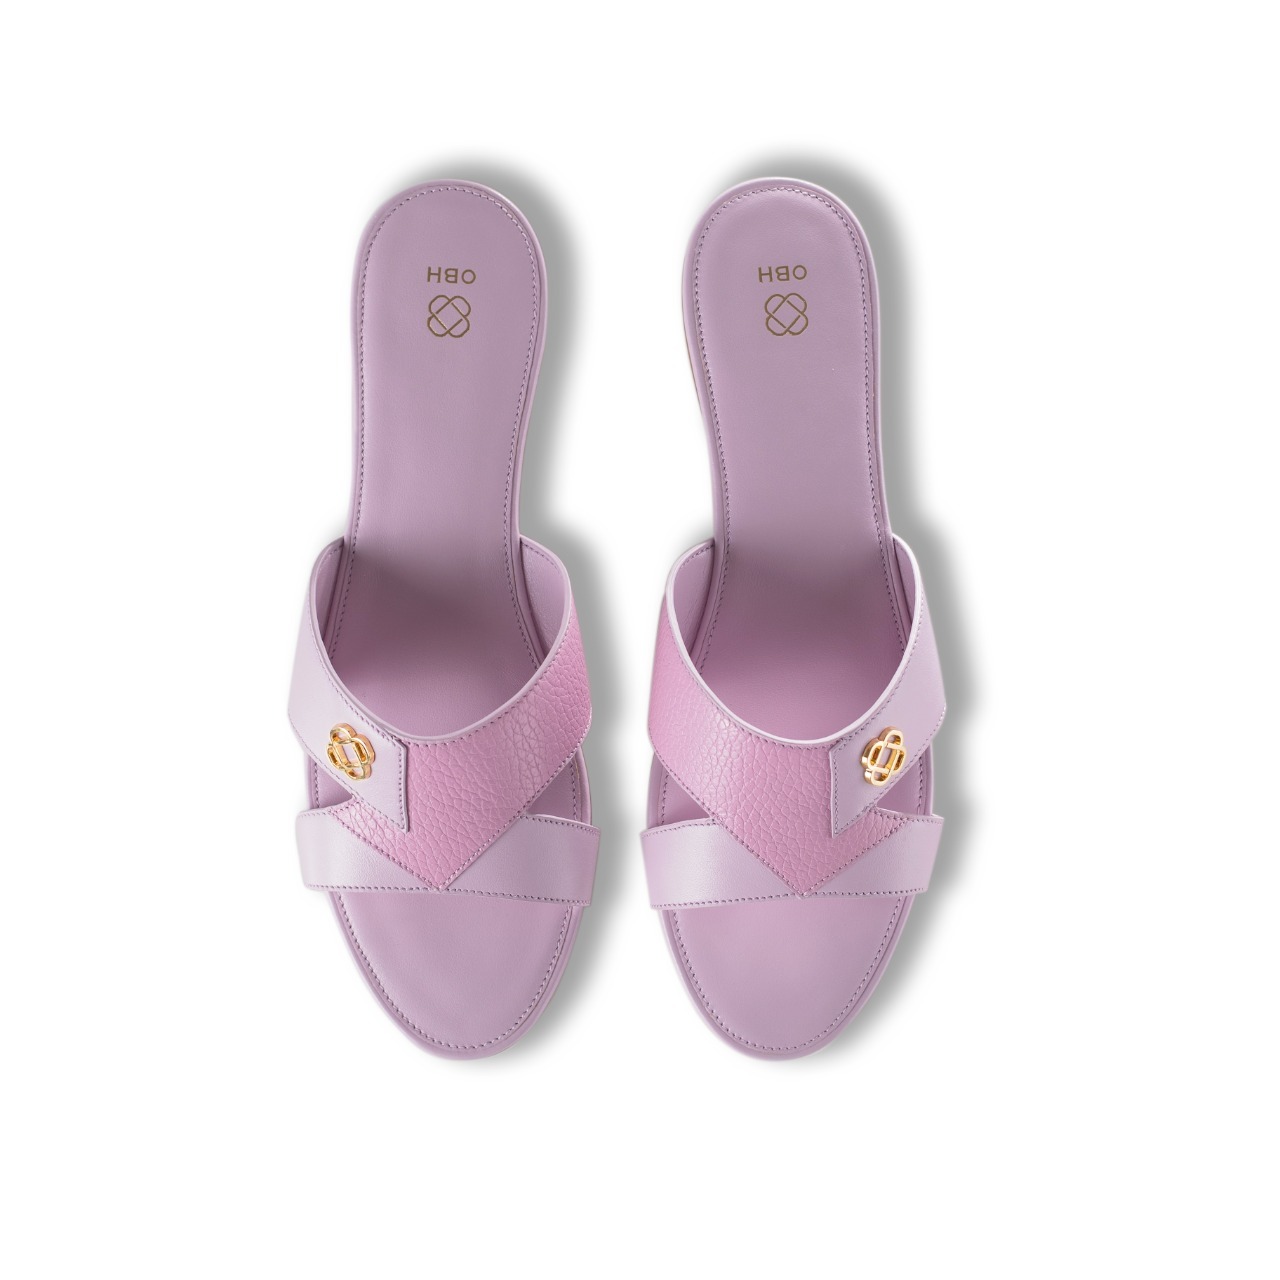 Buy OBH Ladies Sandal 5 Model Lilac Color Online in UAE | OBH Collection